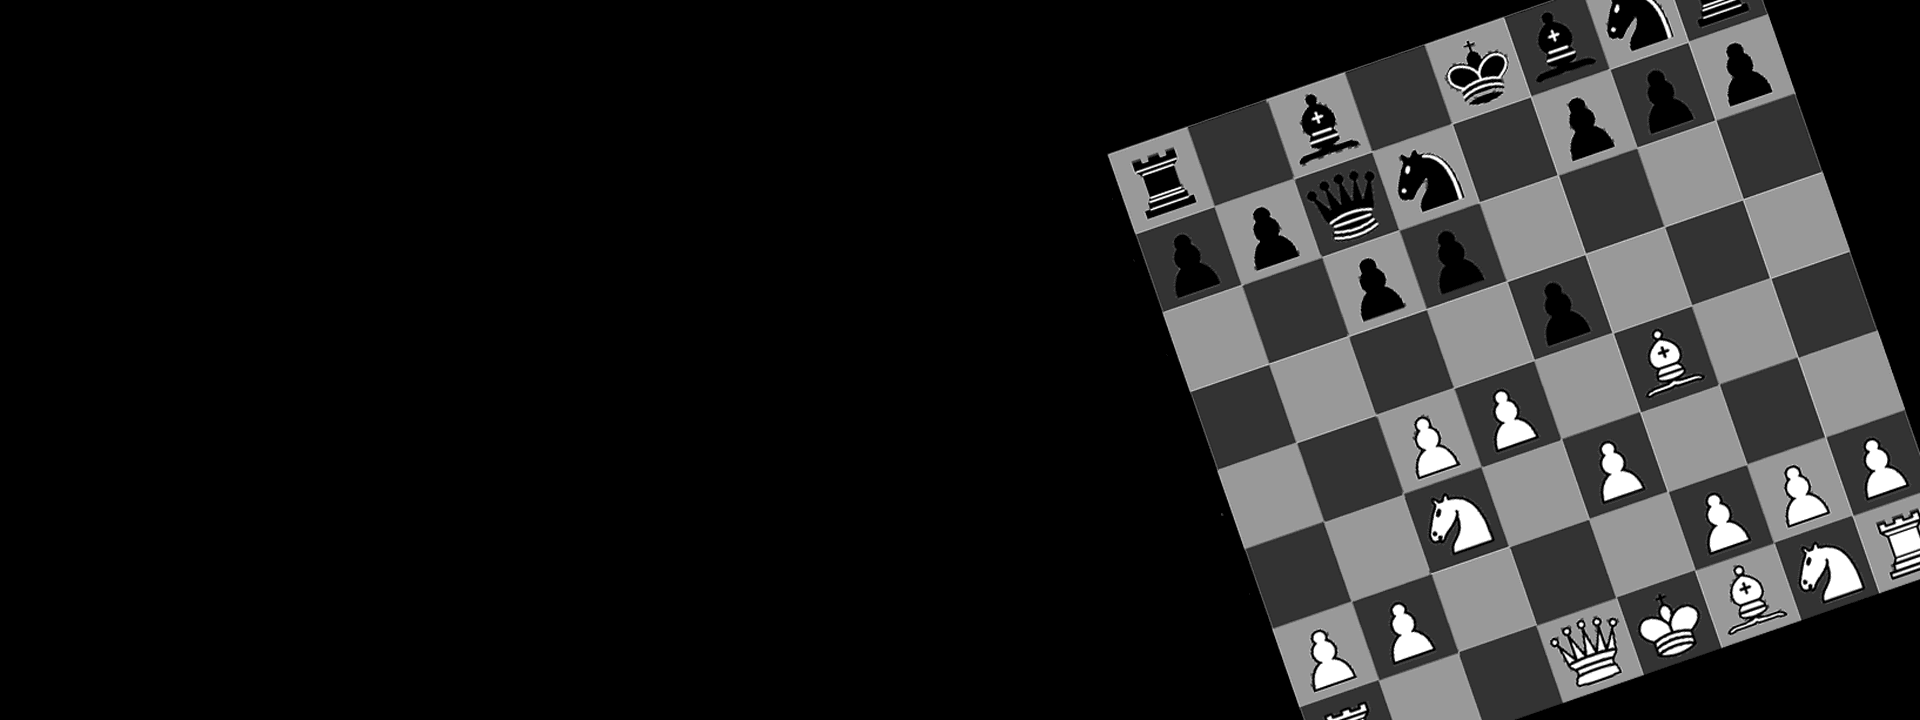 Maia Chess